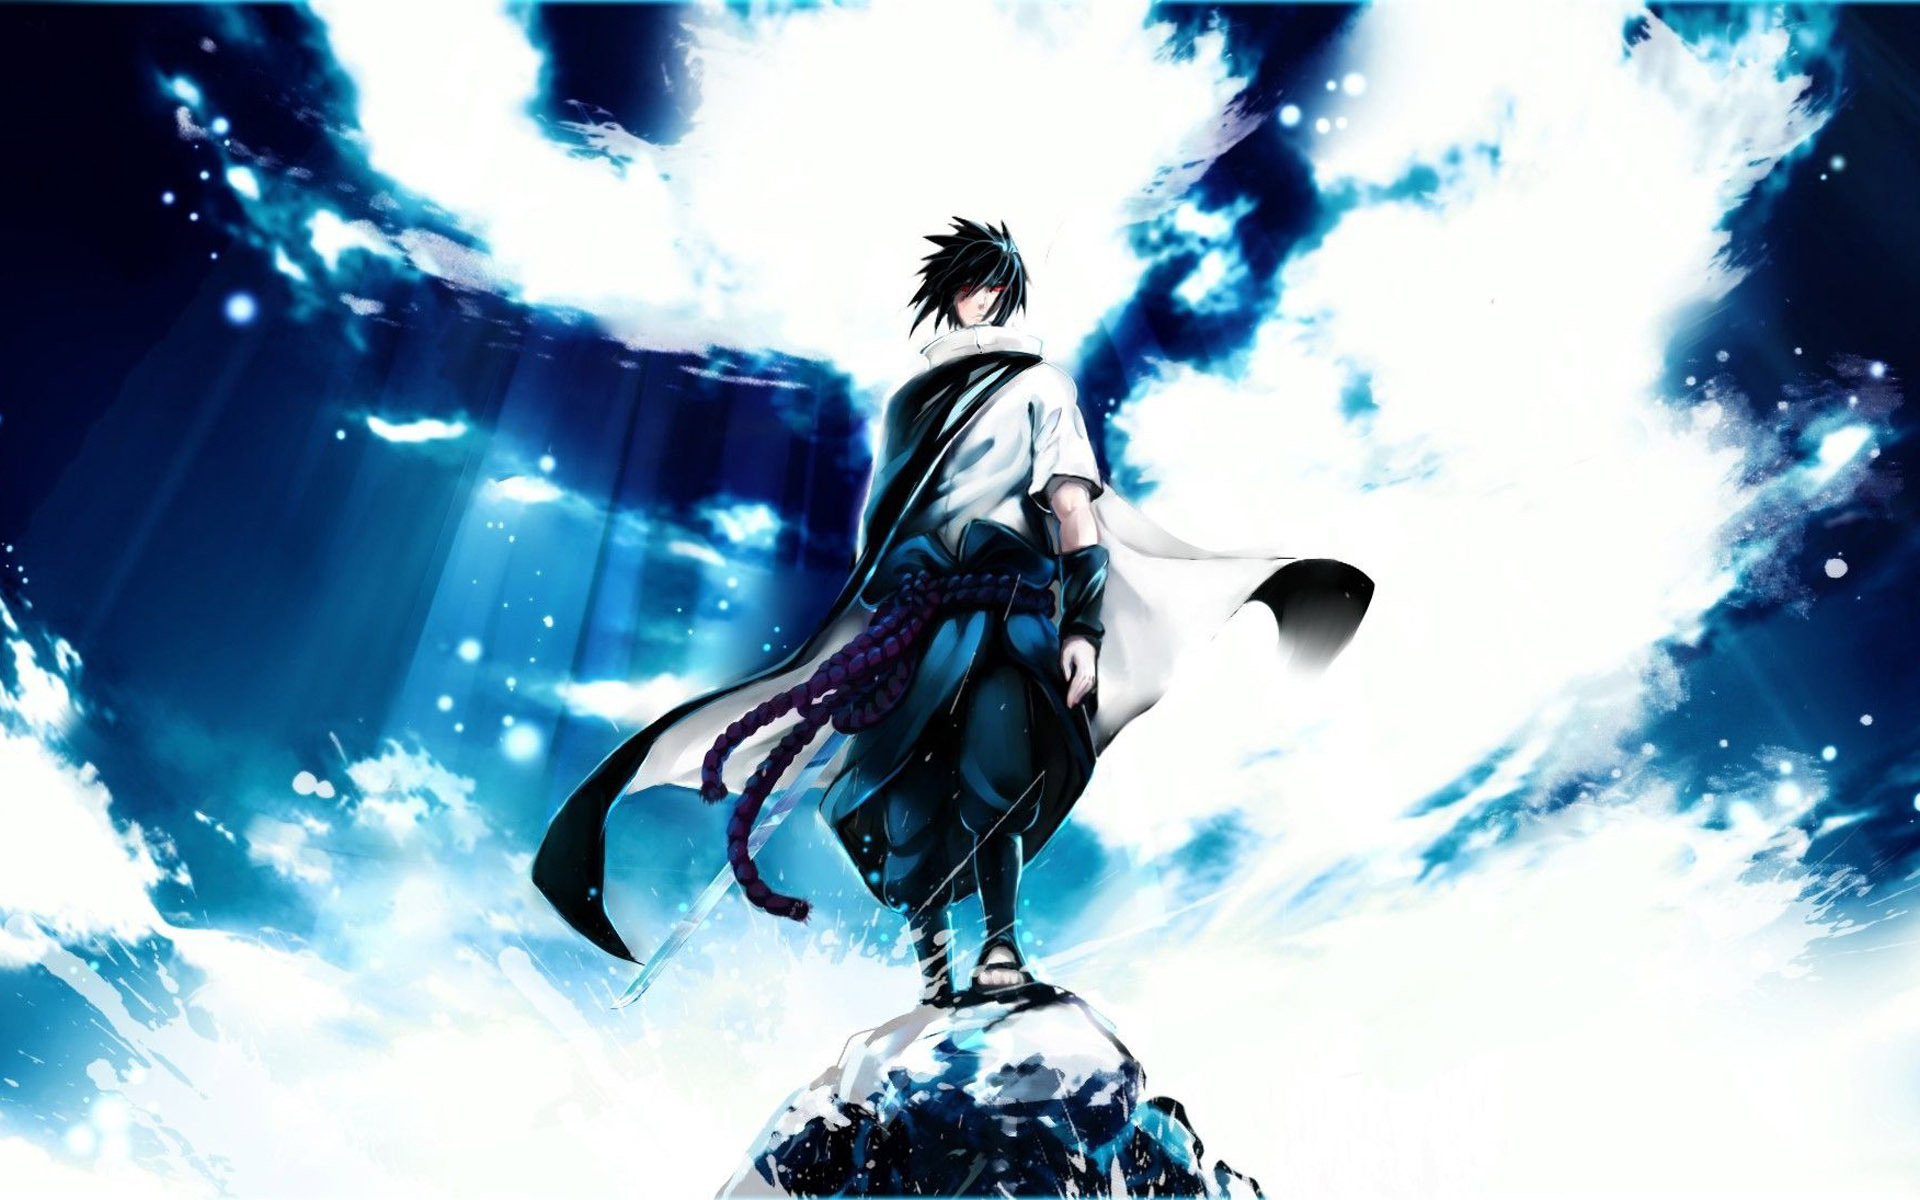 sasuke wallpaper hd,cg artwork,anime,graphic design,sky,black hair